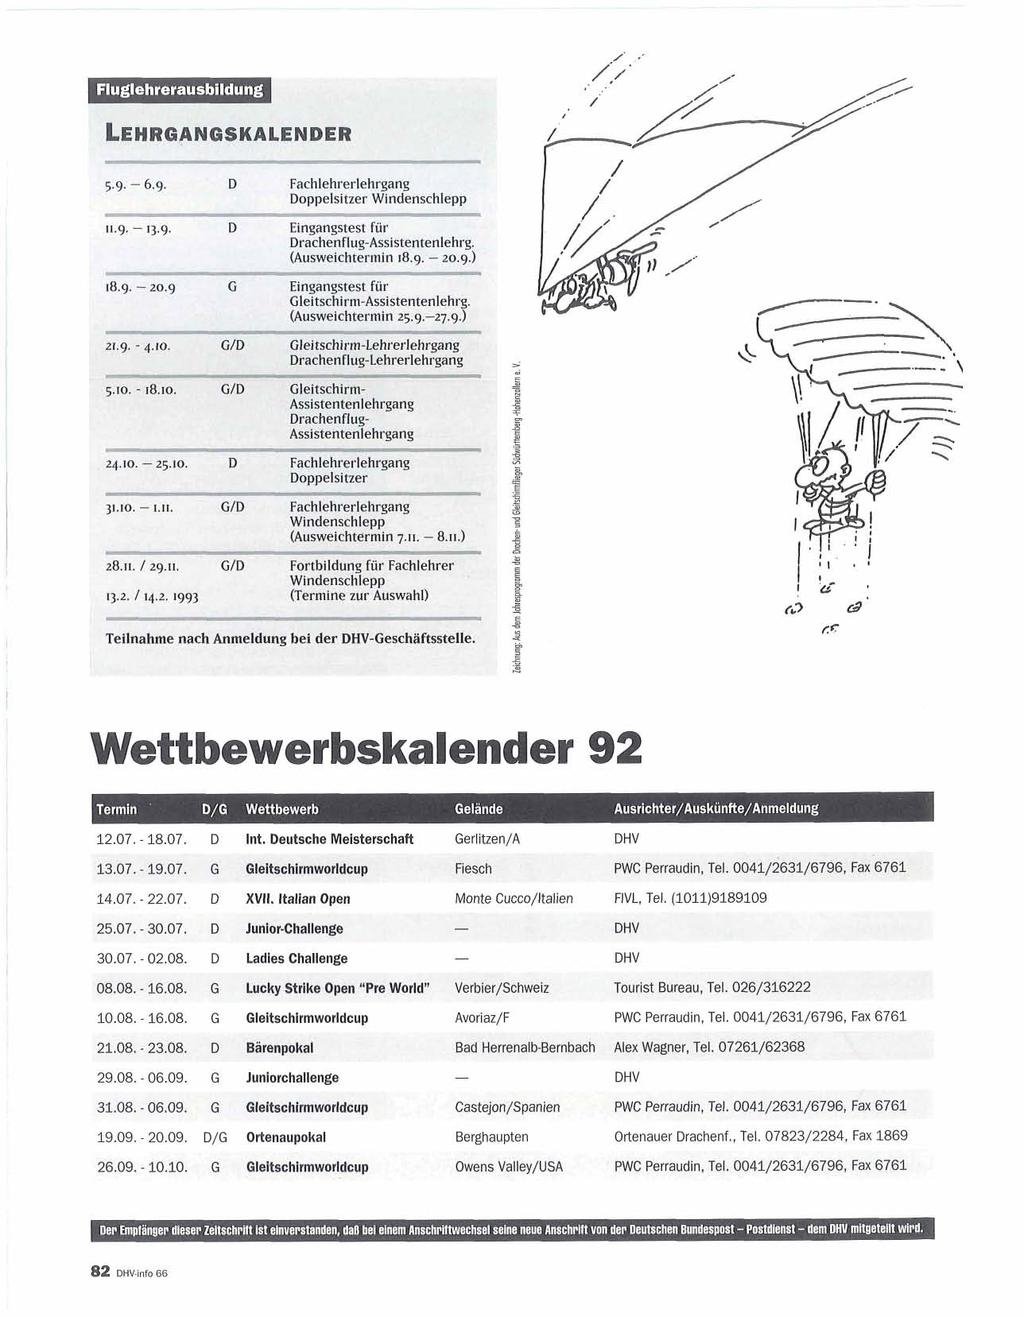 U 5.4. - 6.9. D Fachlehrerlehrgang Doppelsitzer Windenschlepp 11.9. - 13.9. D Eingangstest für Drachenflug-Assistentenlehrg. (Ausweichtermin 18.9. - 20.